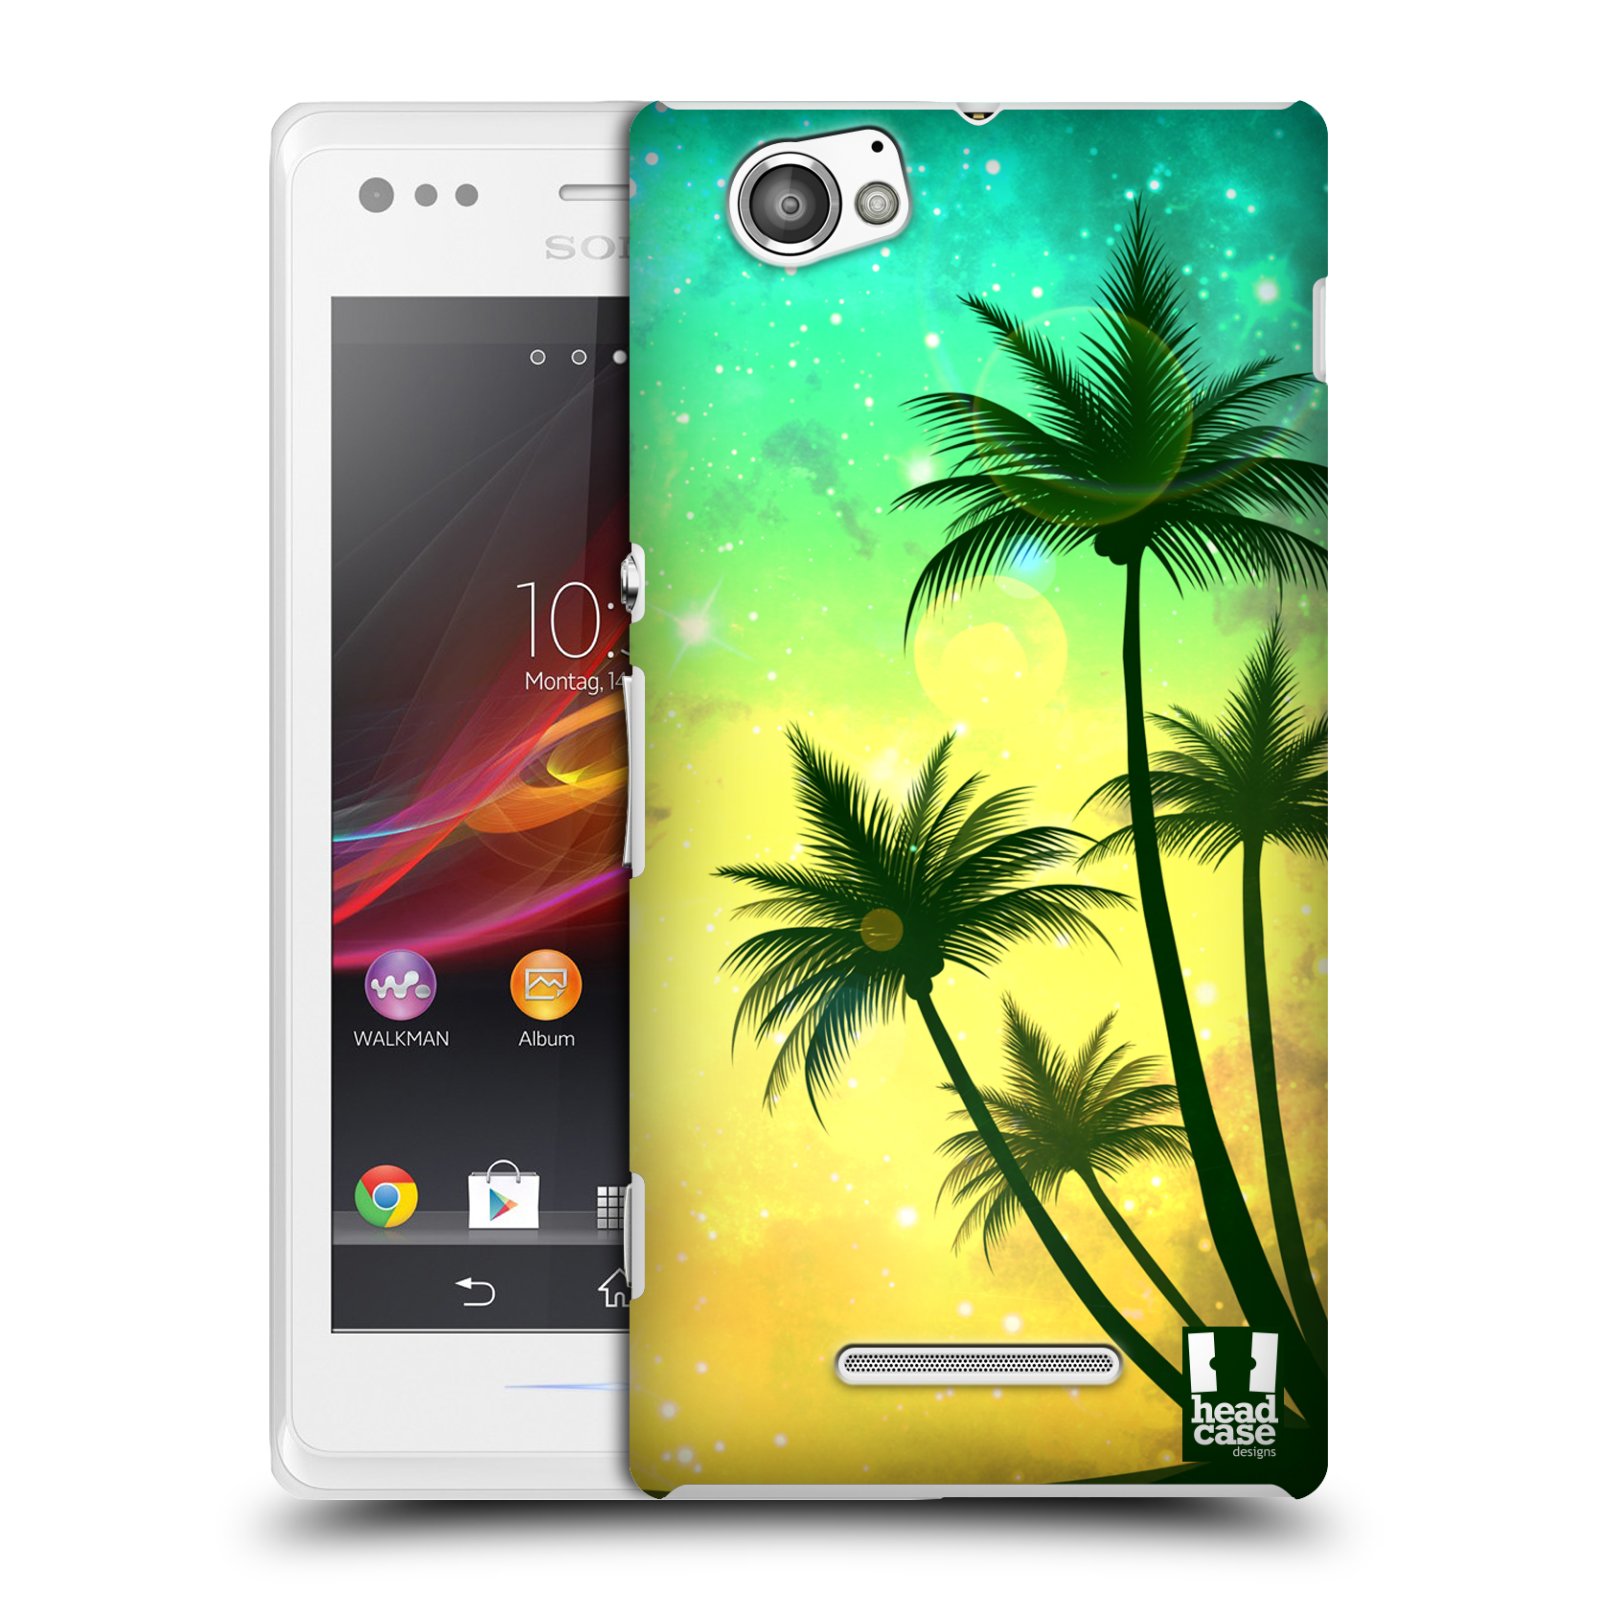 HEAD CASE plastový obal na mobil Sony Xperia M vzor Kreslený motiv silueta moře a palmy TYRKYSOVÁ